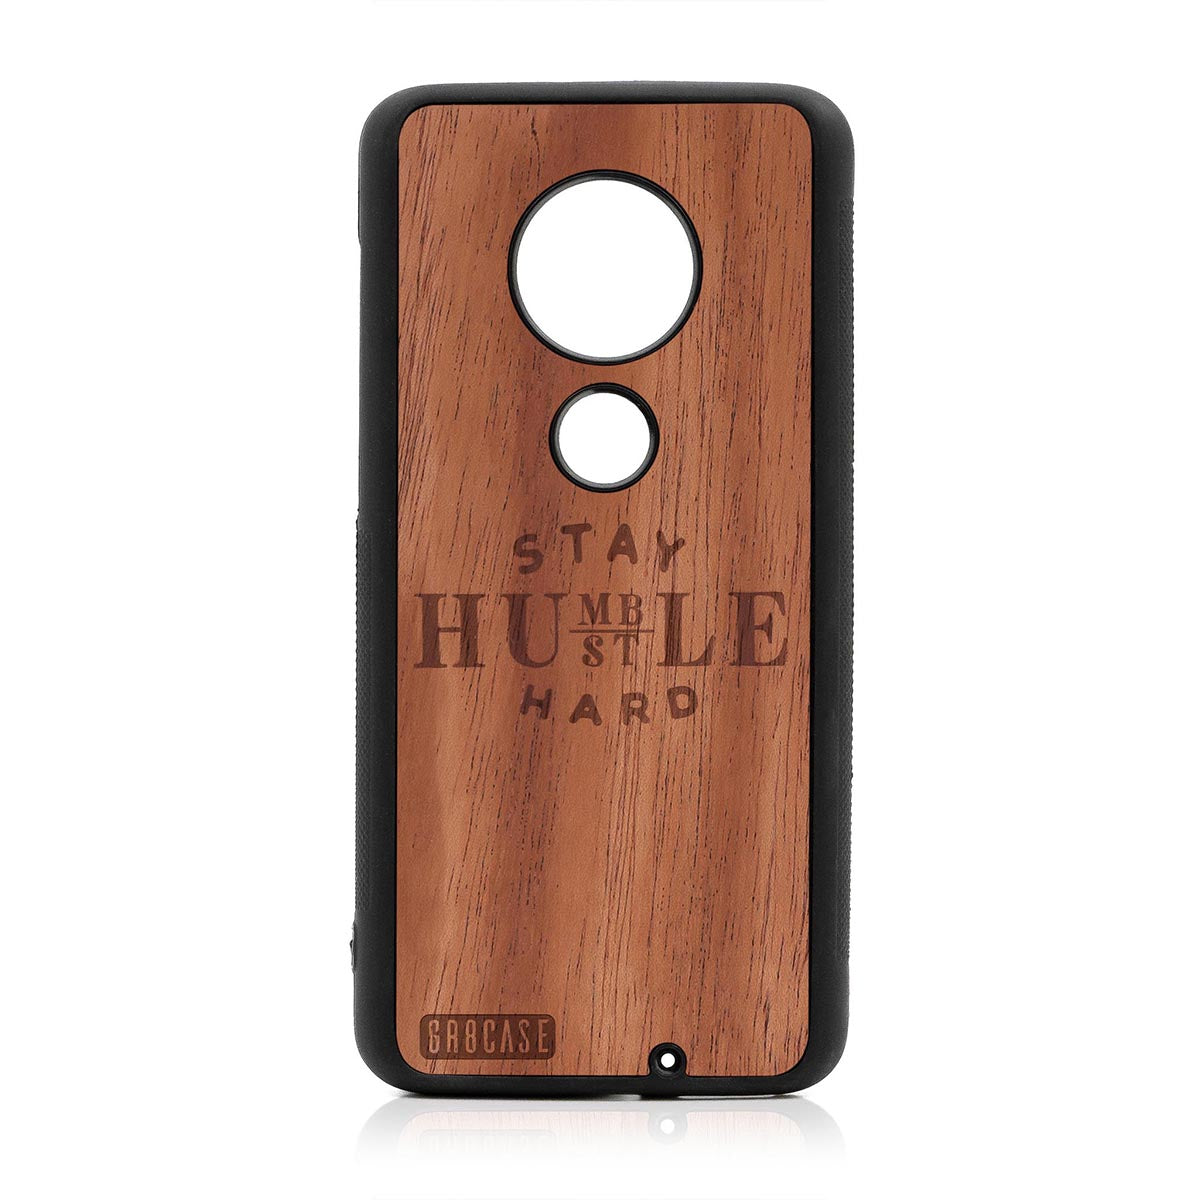 Stay Humble Hustle Hard Design Wood Case Moto G7 Plus by GR8CASE